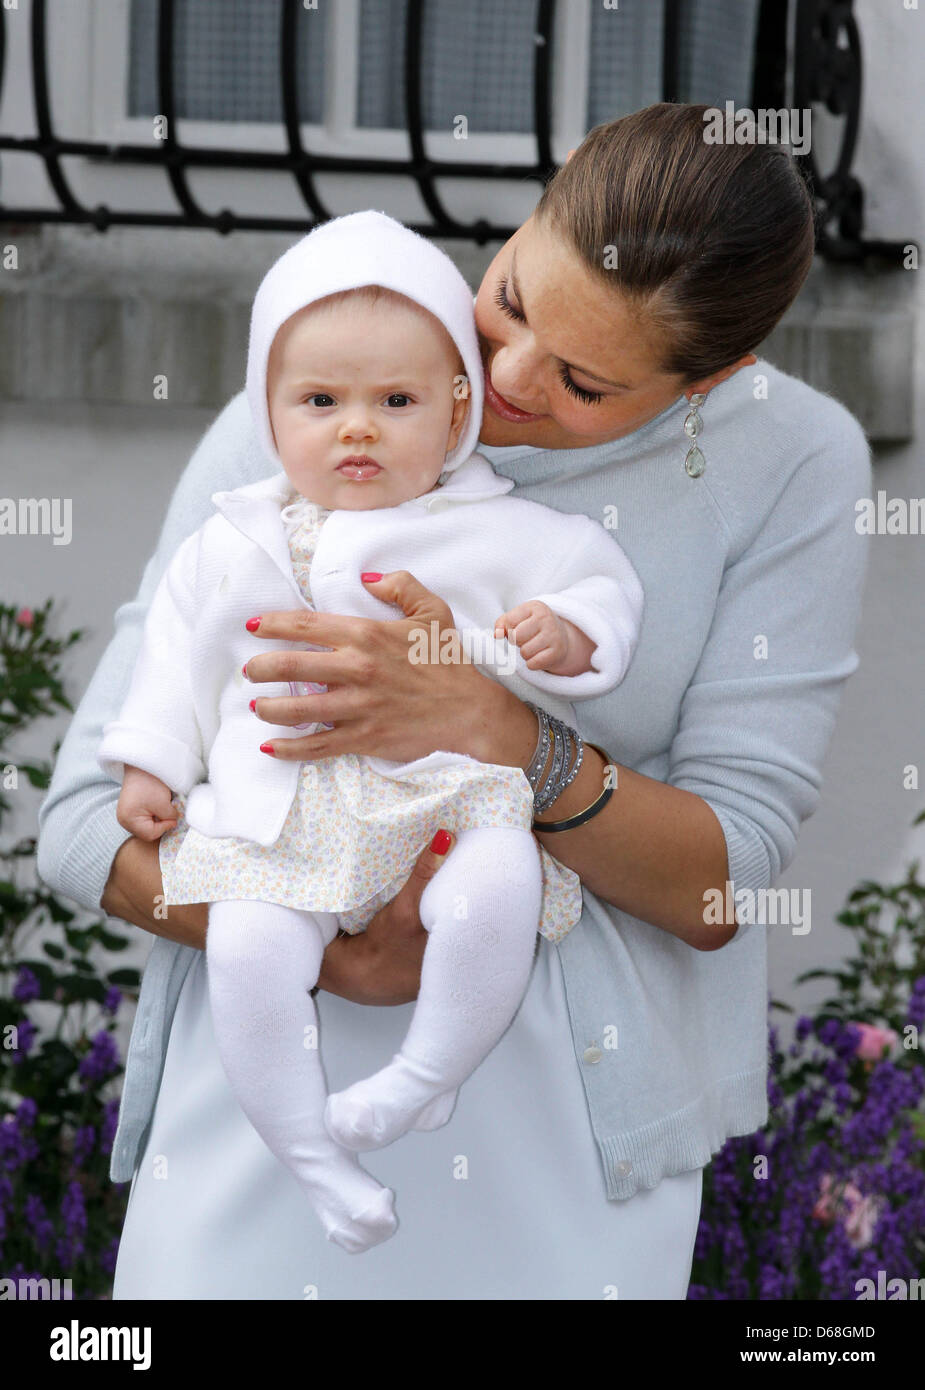 swedish-crown-princess-victoria-holds-her-daughter-princess-estelle-D68GMD.jpg